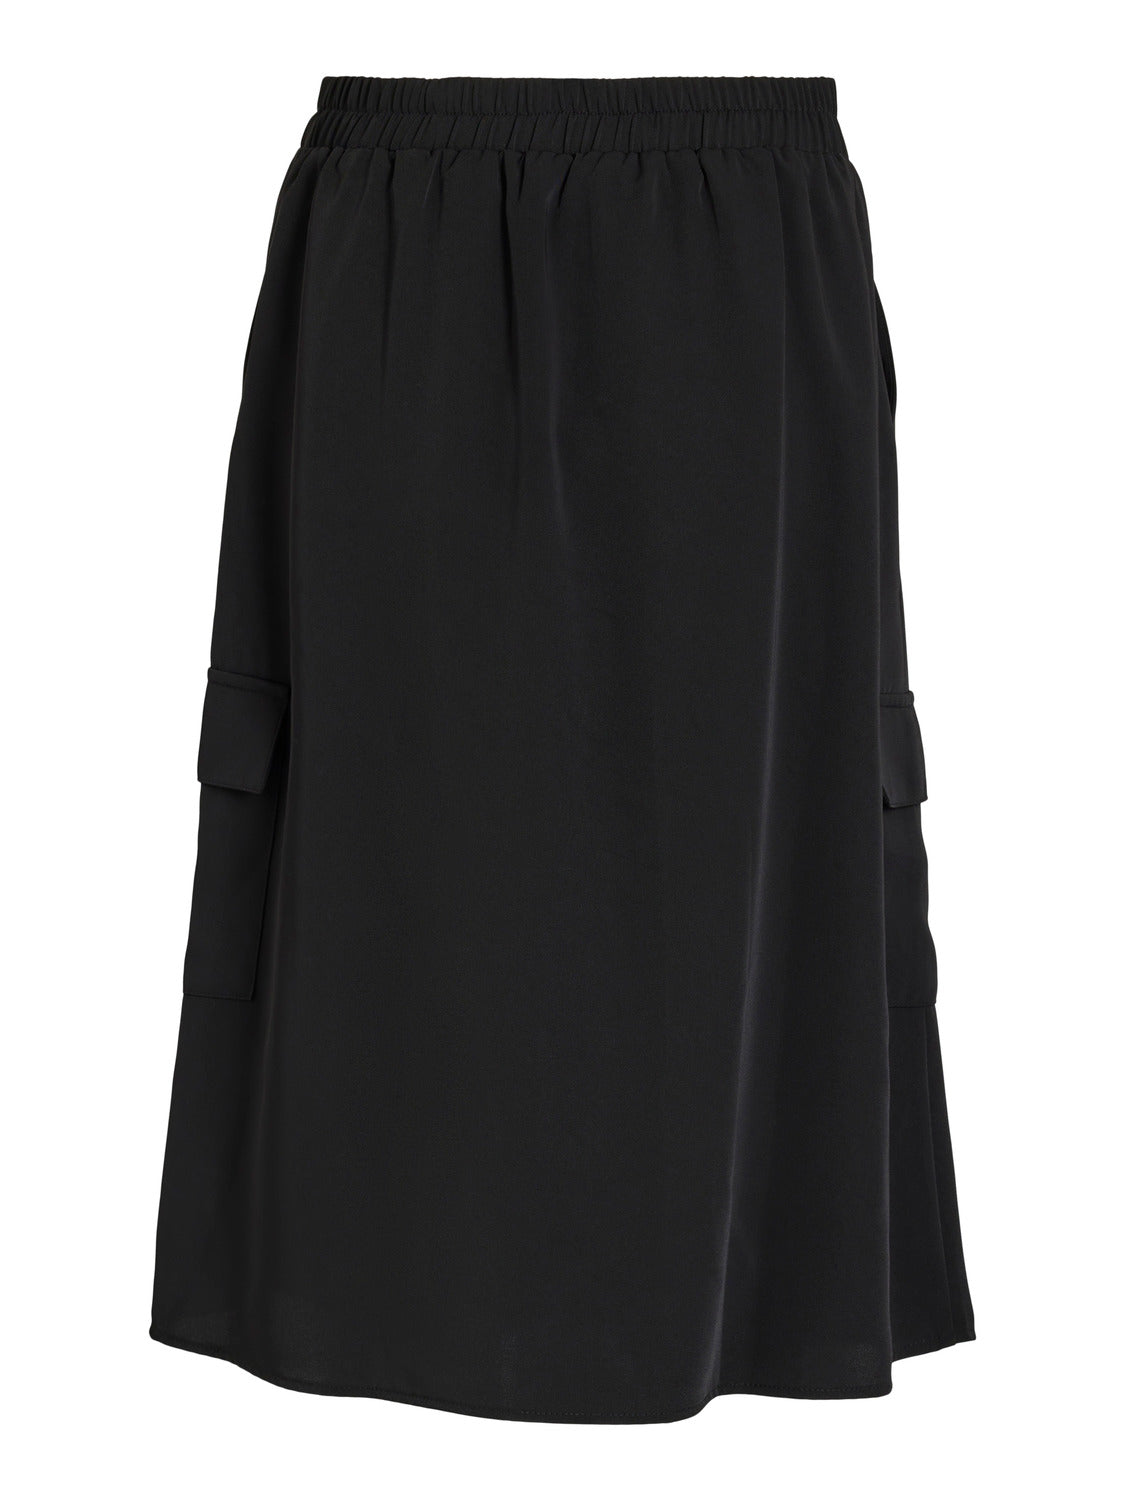 VIPETRA Skirt - Black